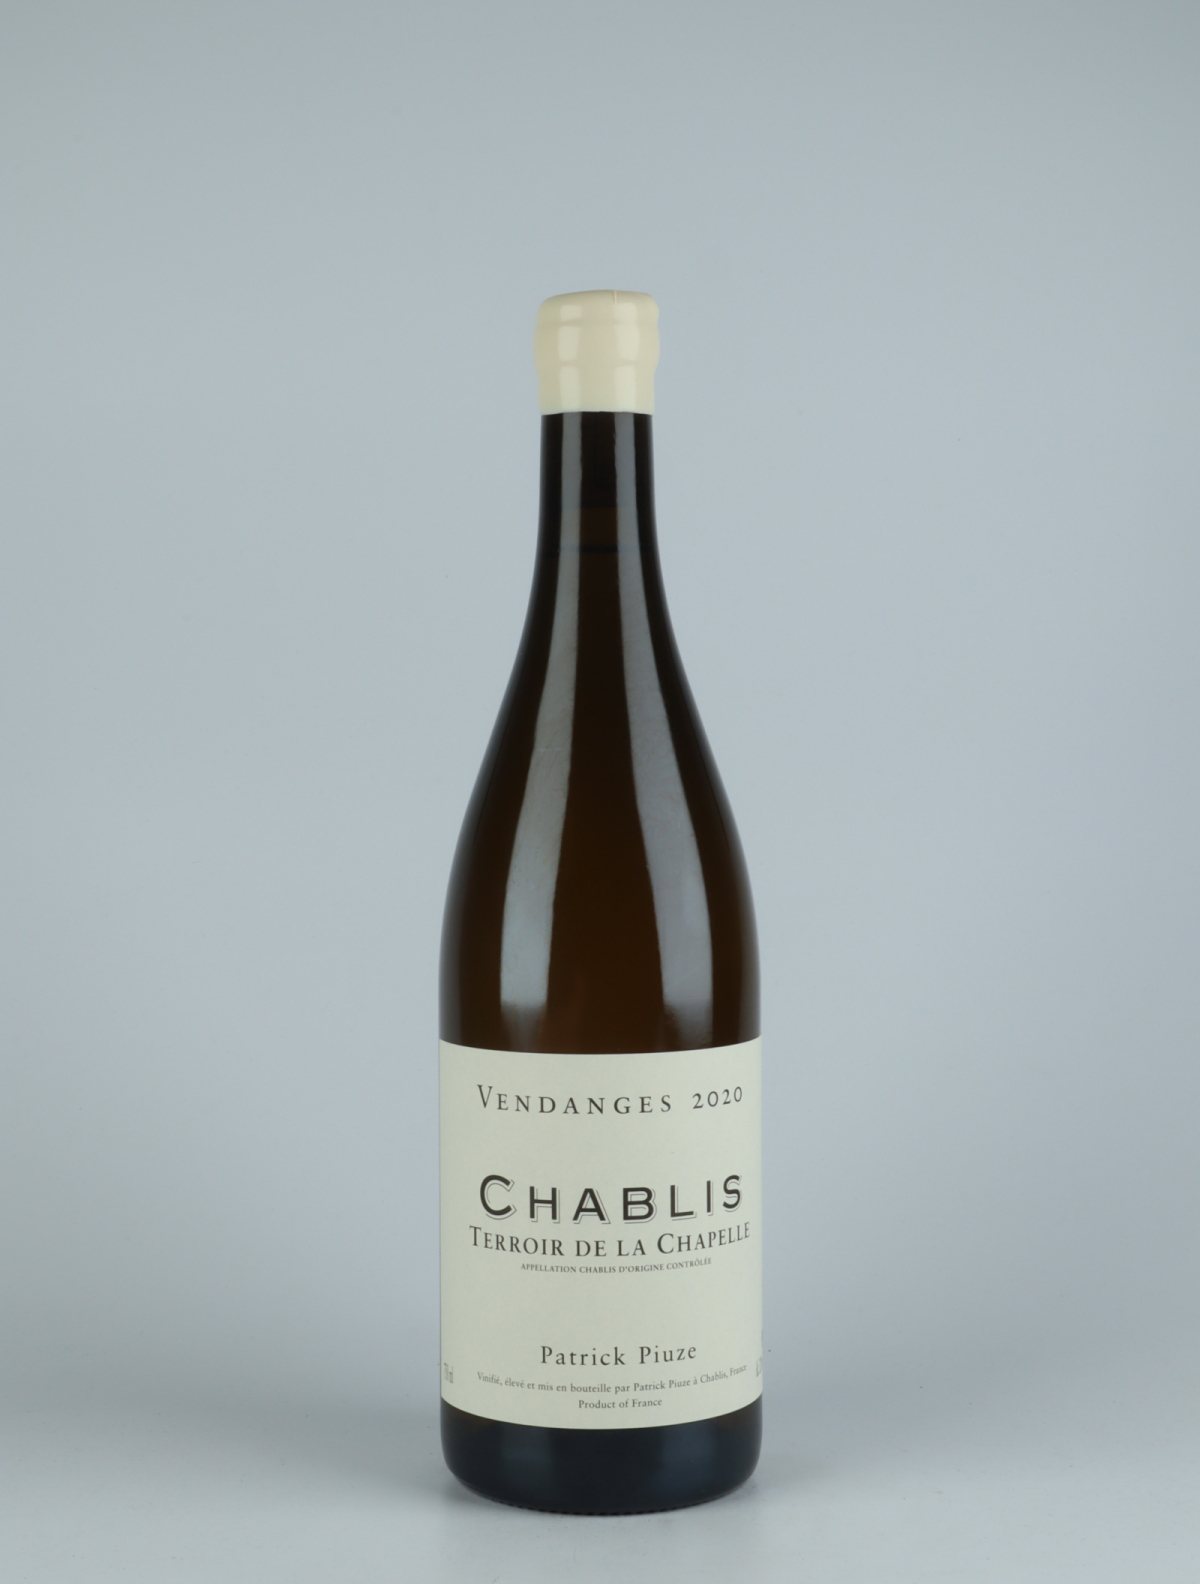 A bottle 2020 Chablis - Terroir de la Chapelle White wine from Patrick Piuze, Burgundy in France